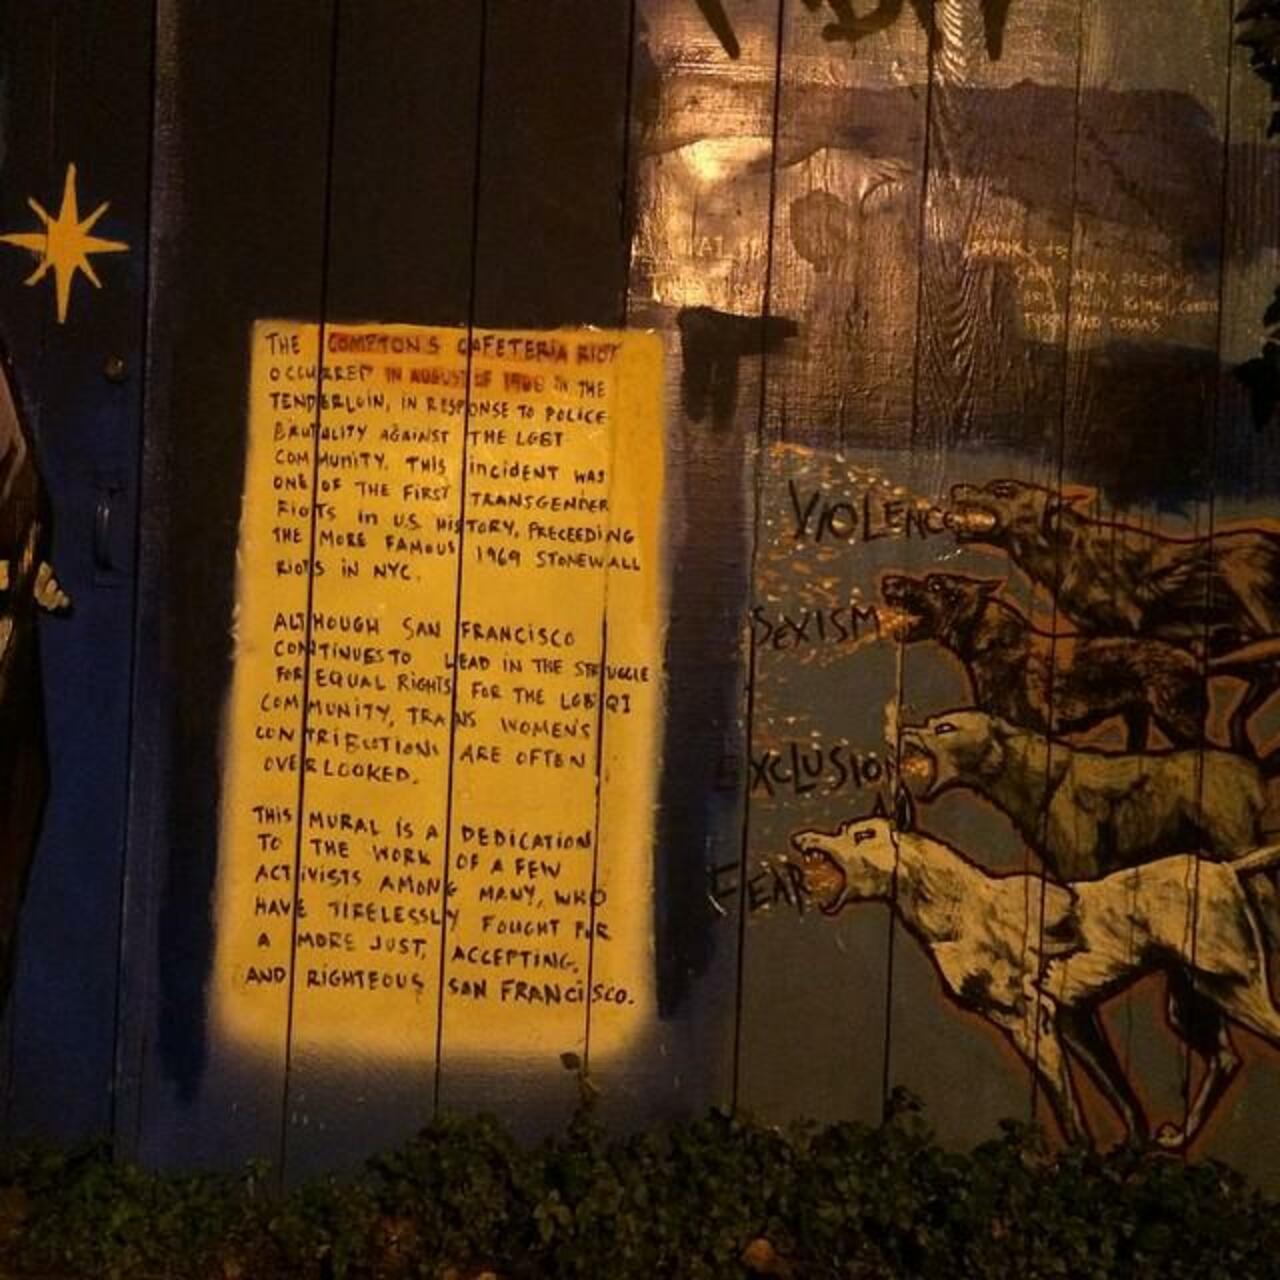 #Mural #Graffiti #WallArt #Art #MissionStreet #SanFrancisco http://t.co/k262rTeF0a